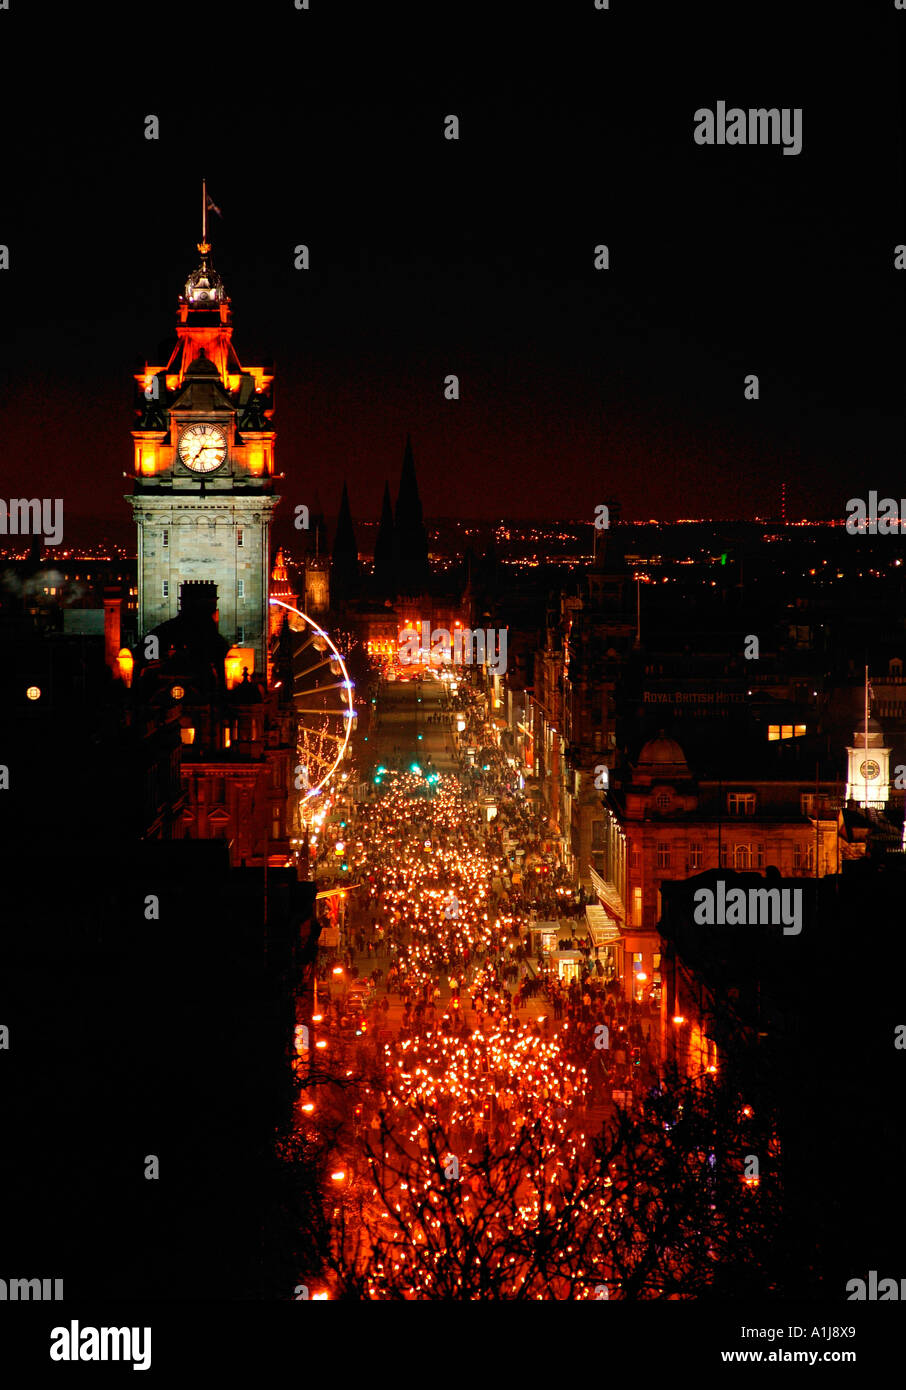 Torchlight procession, New Year celebrations, Edinburgh city centre, Scotland, UK, Europe Stock Photo